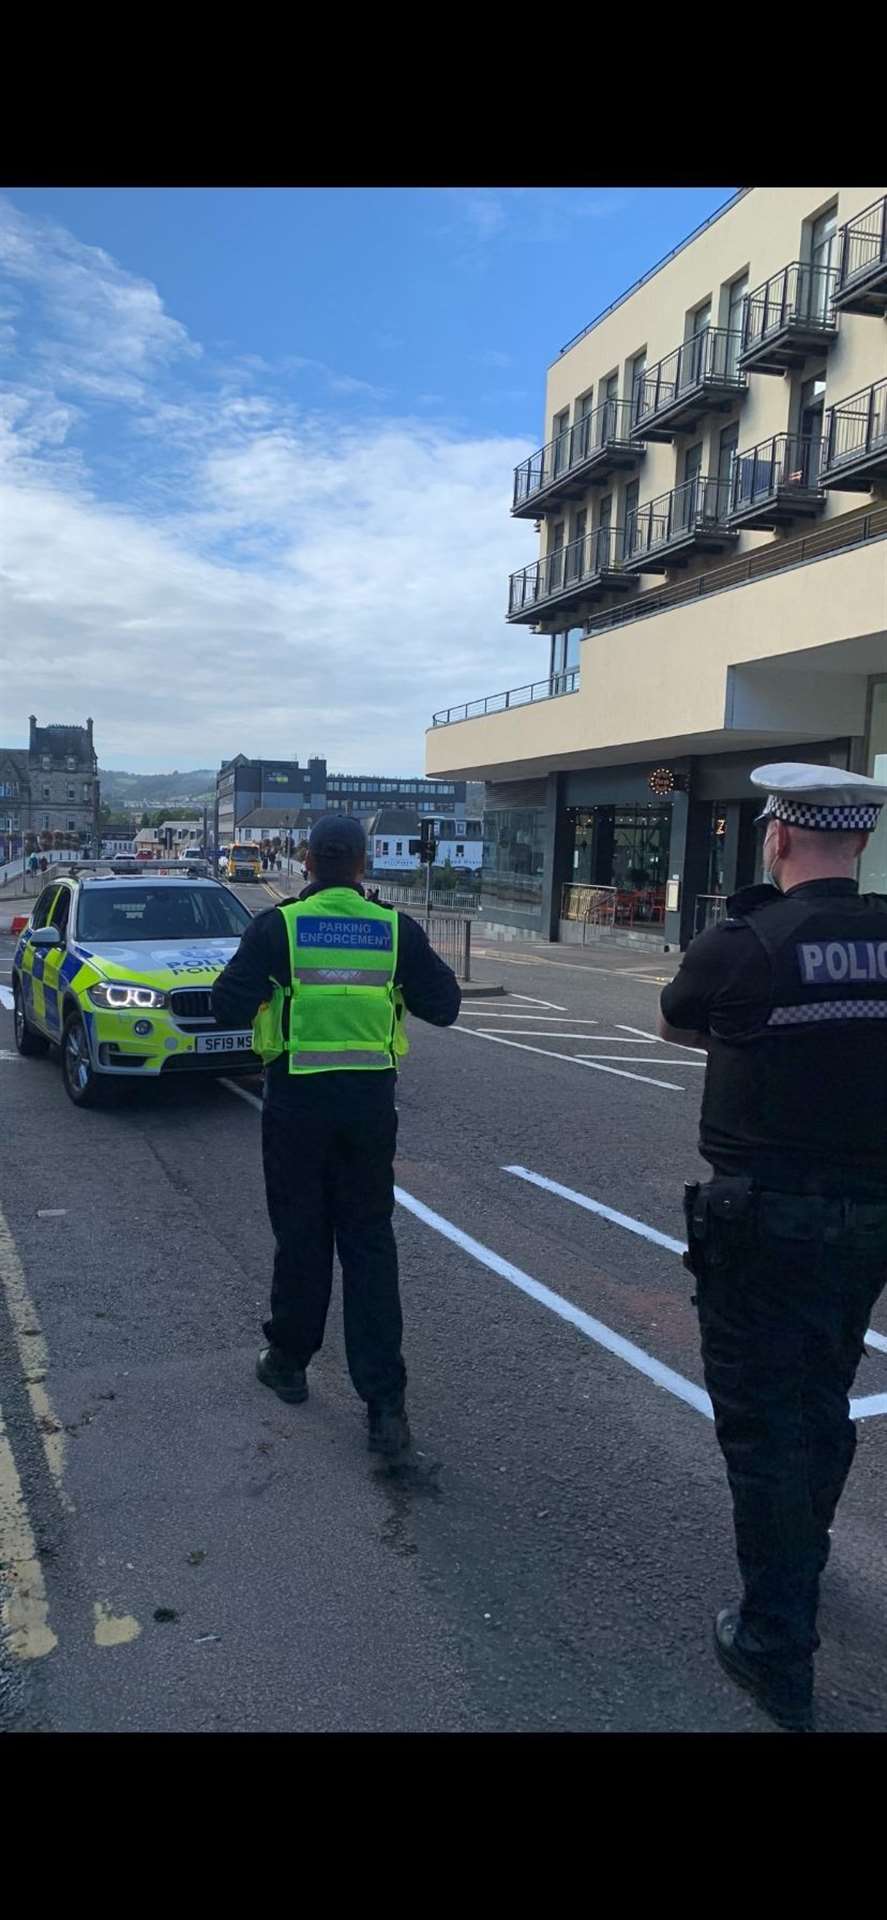 Police in Inverness city centre.